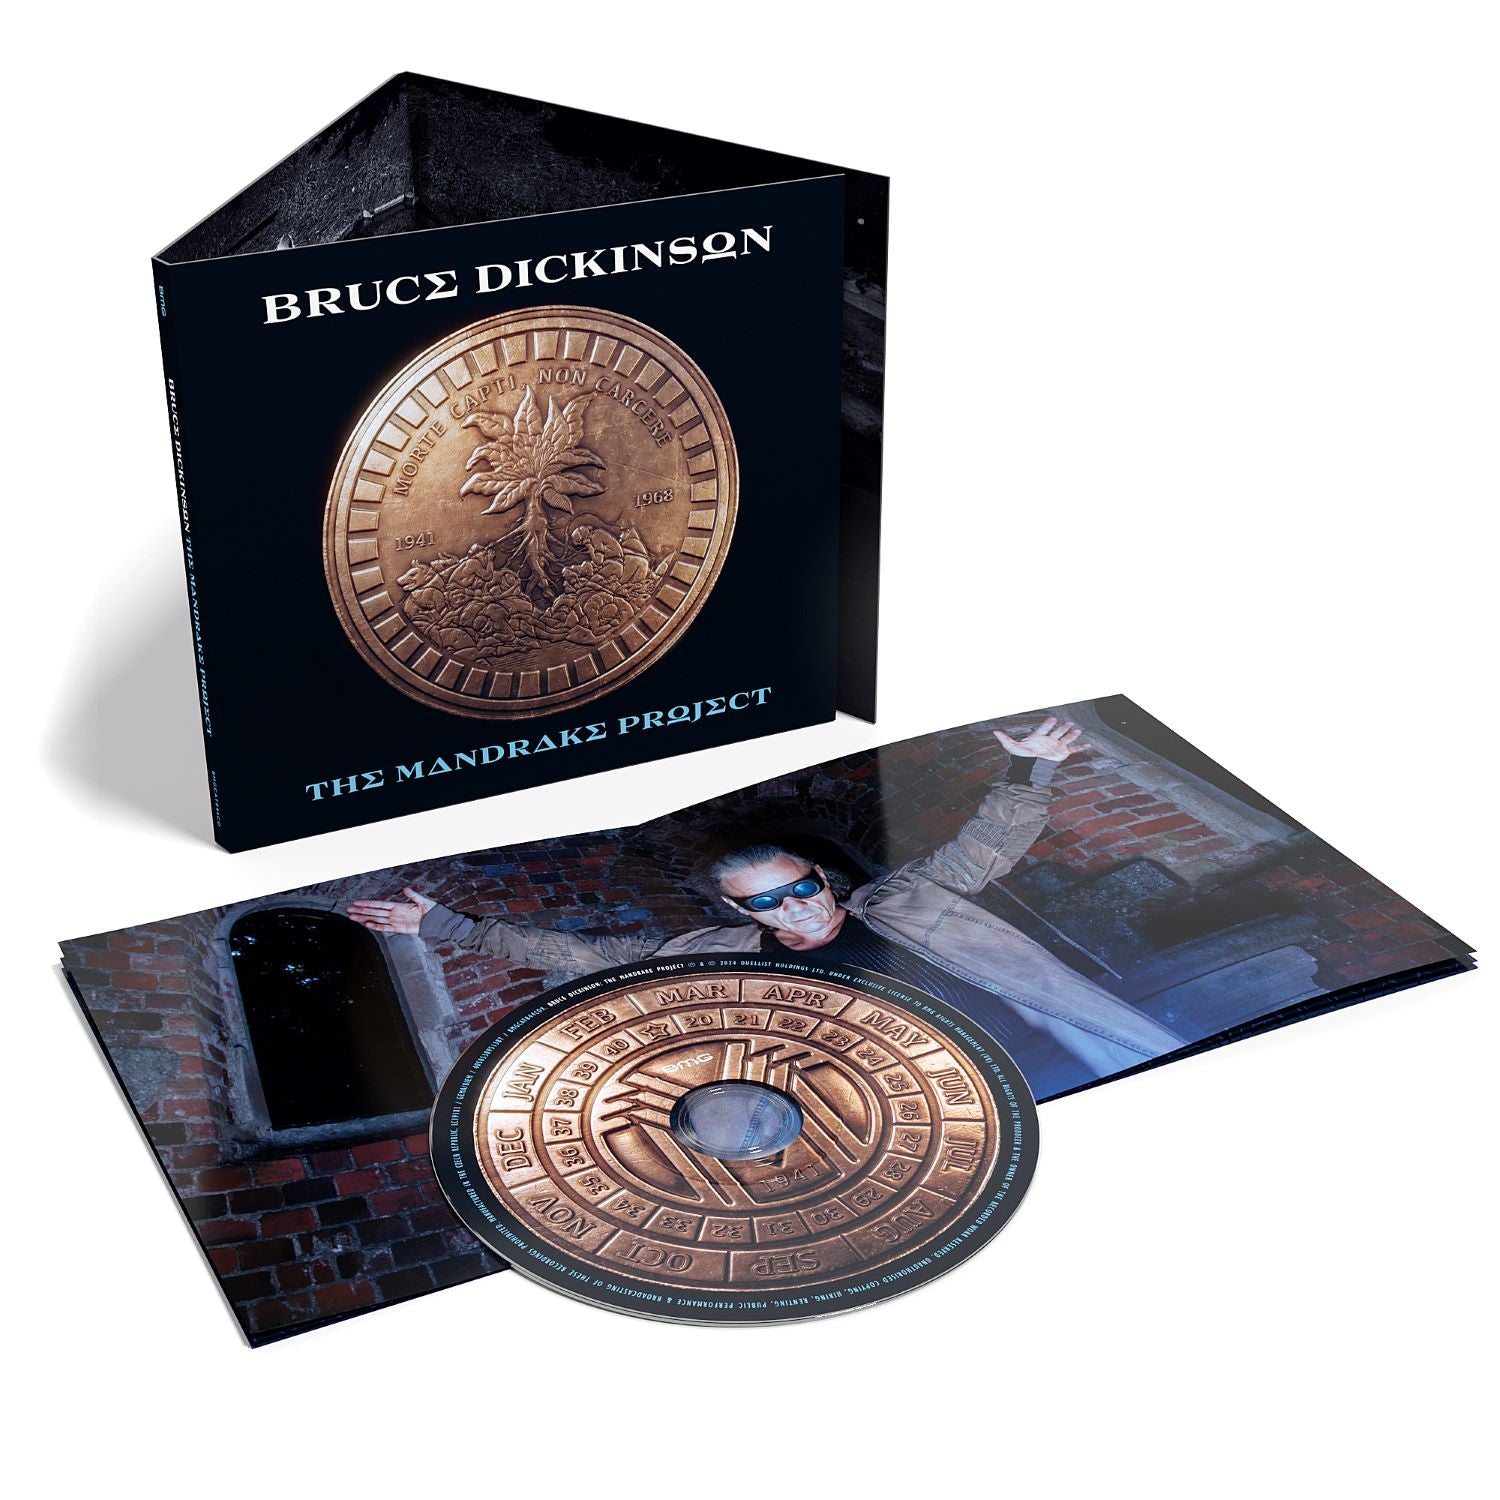 Bruce Dickinson "The Mandrake Project" Digipak CD - PRE-ORDER